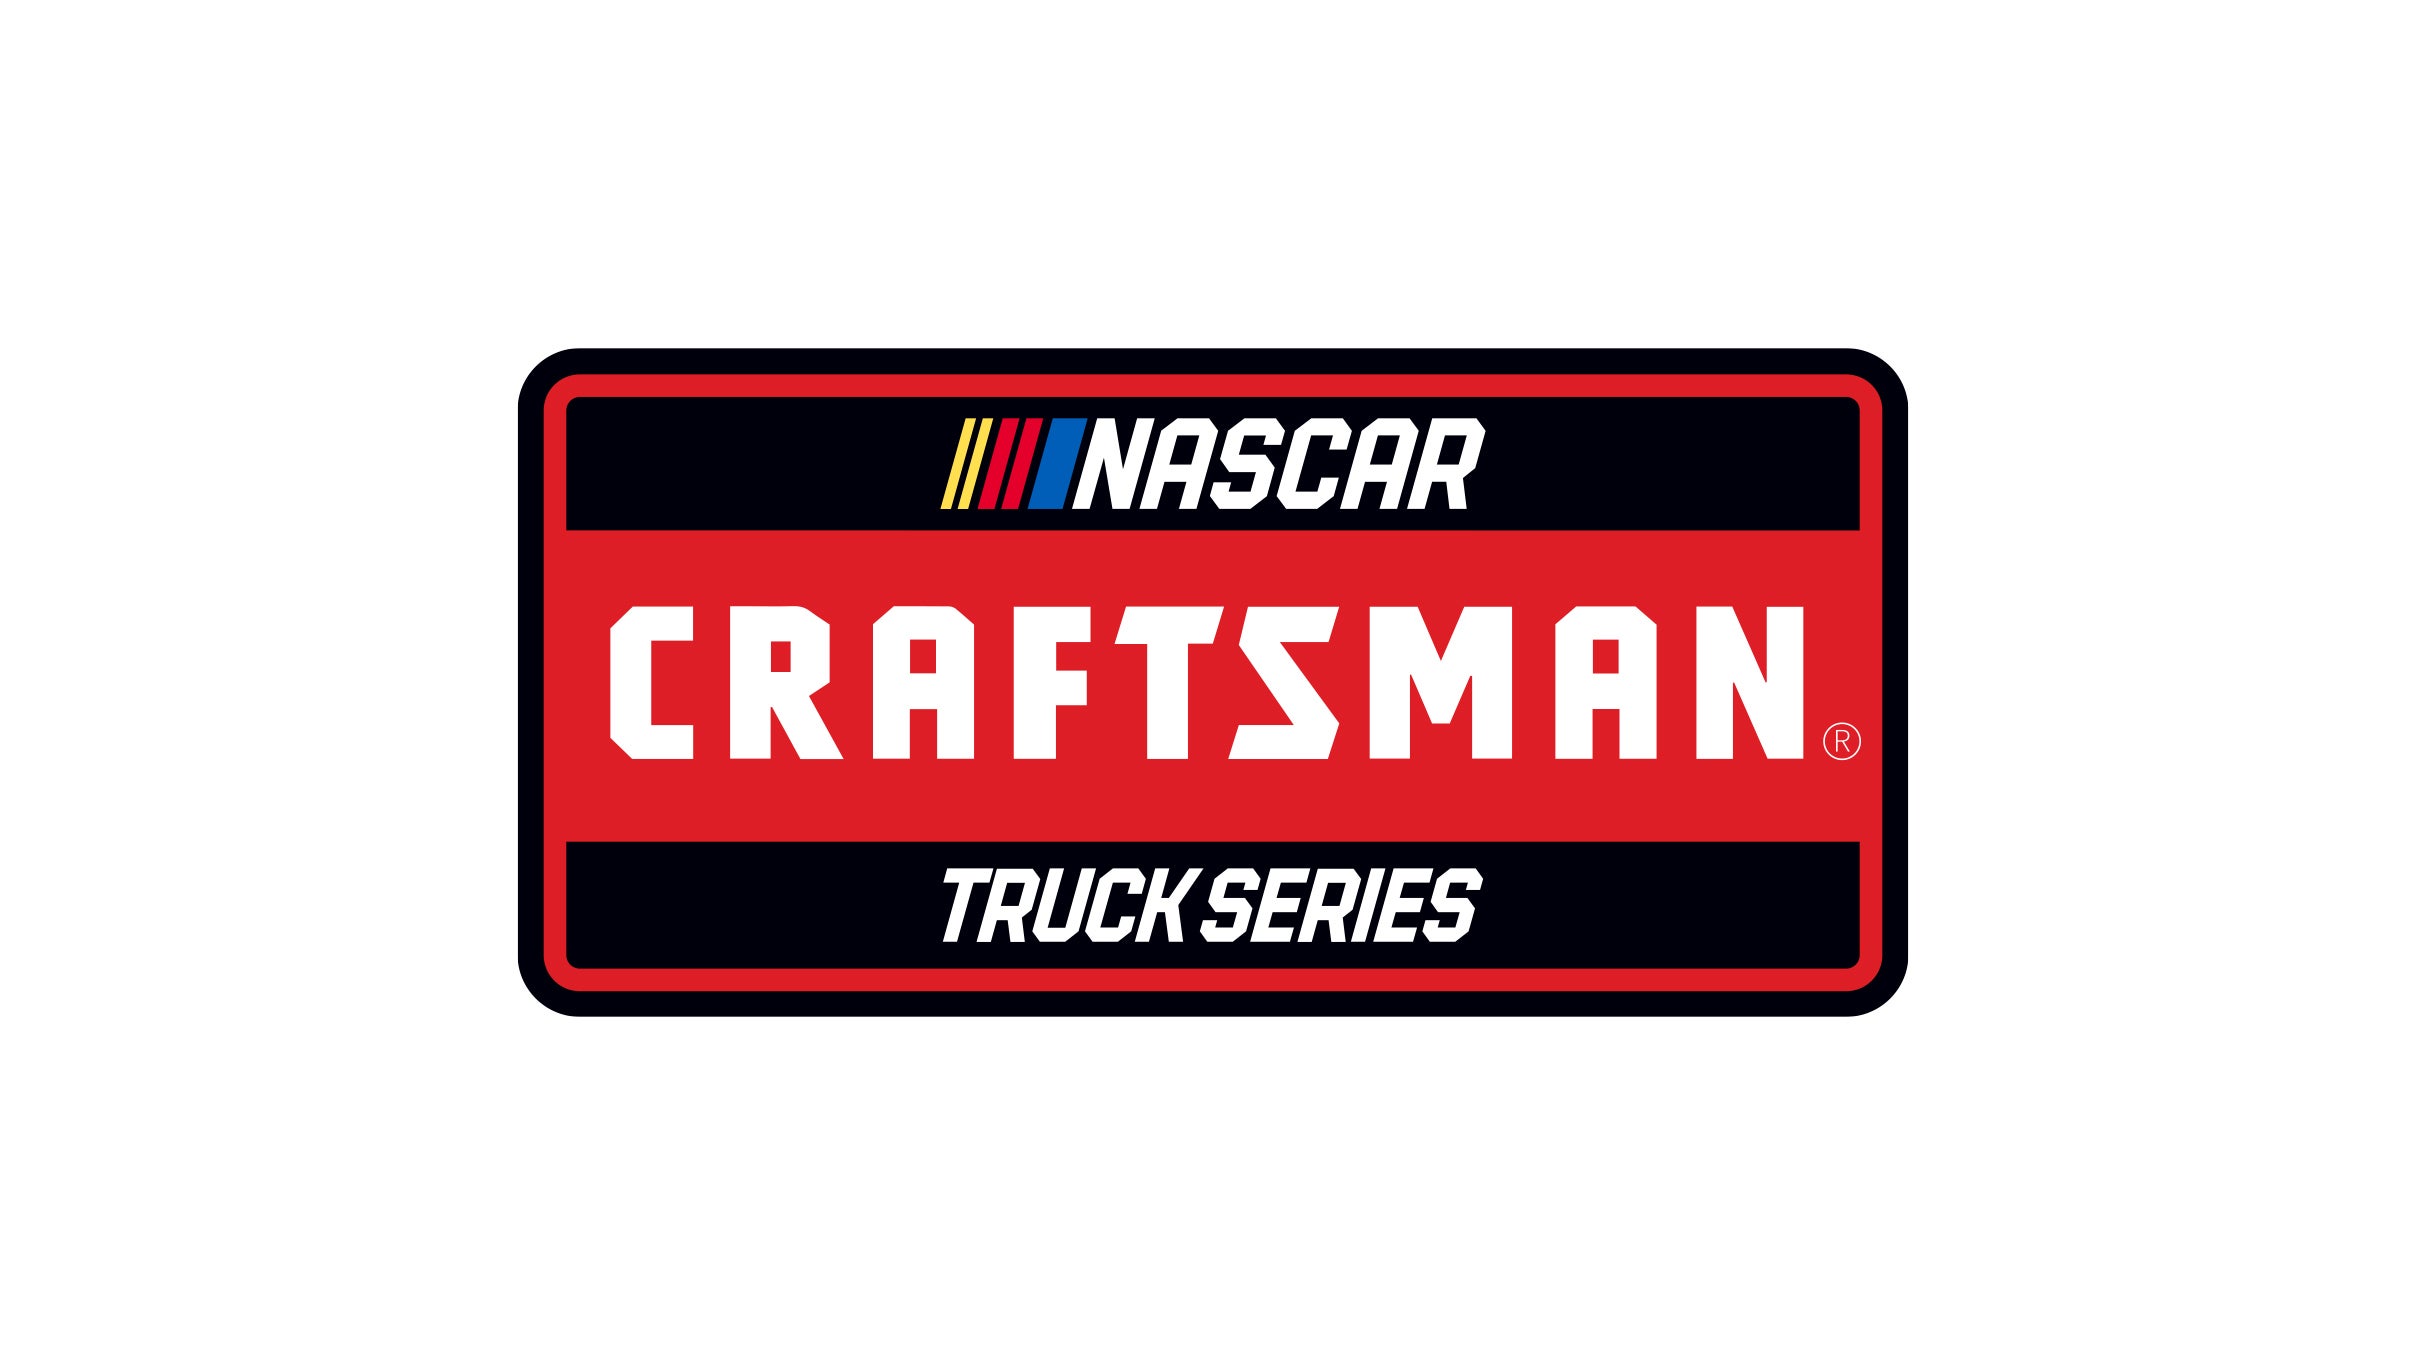 Nascar Craftsman Truck Series at Lucas Oil Raceway